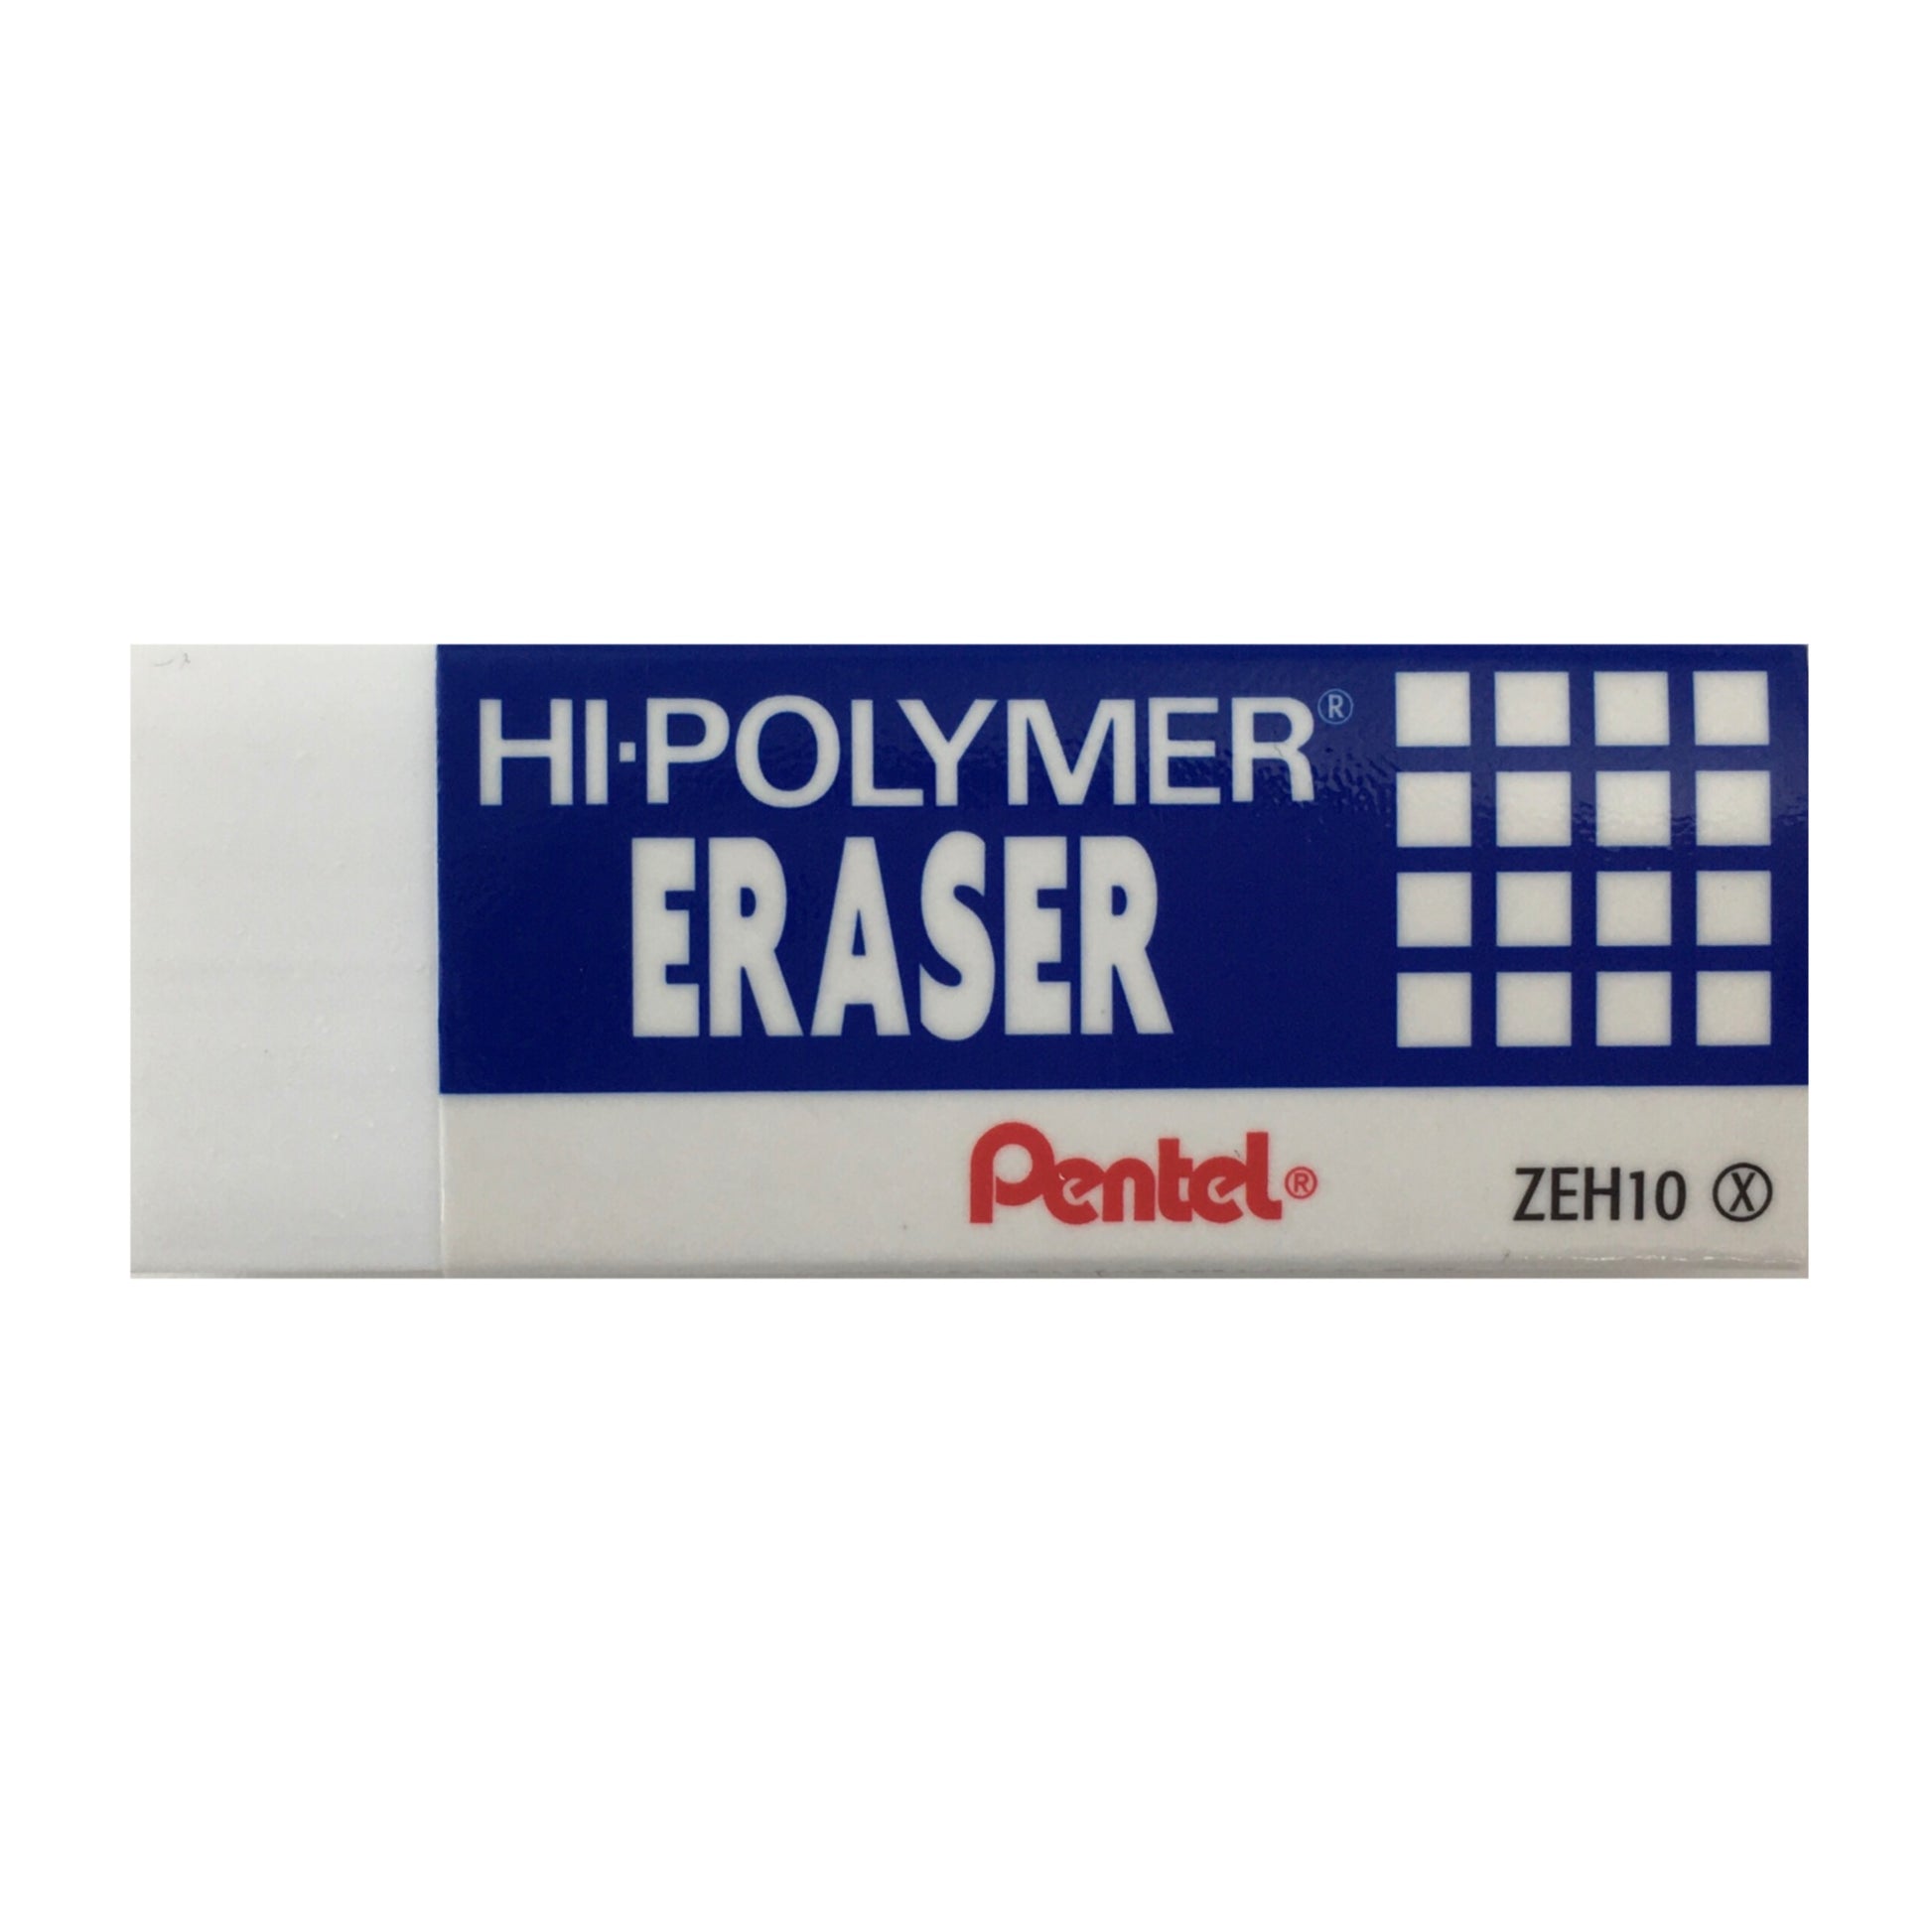 New Erasers : r/erasers